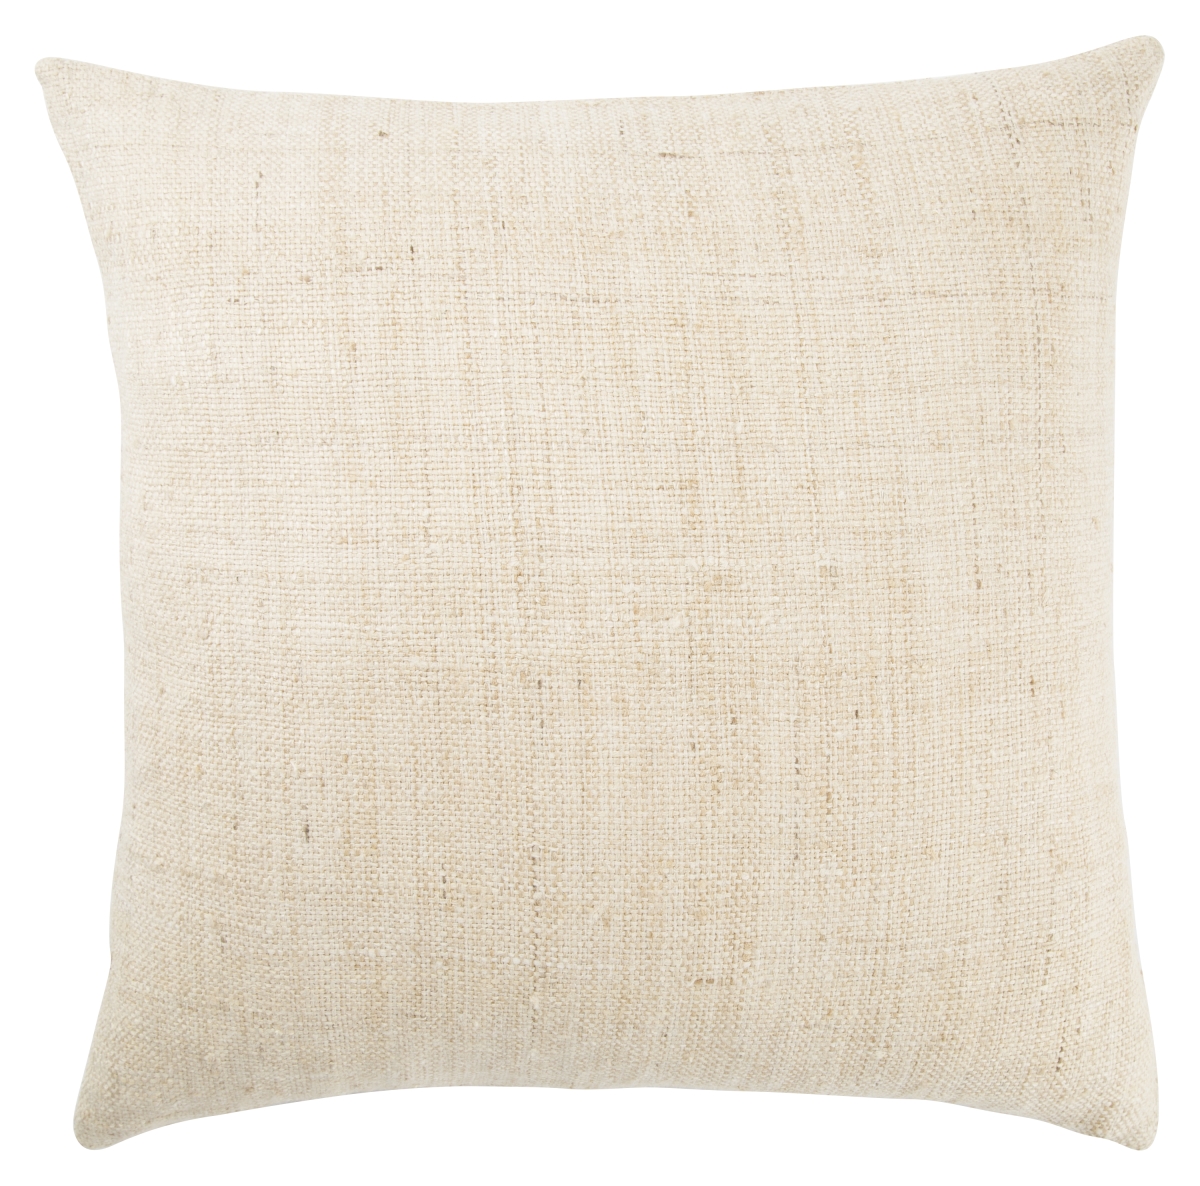 Plw103134 22 X 22 In. Mandarina Crisp Ivory & Beige Textured Poly Throw Pillow